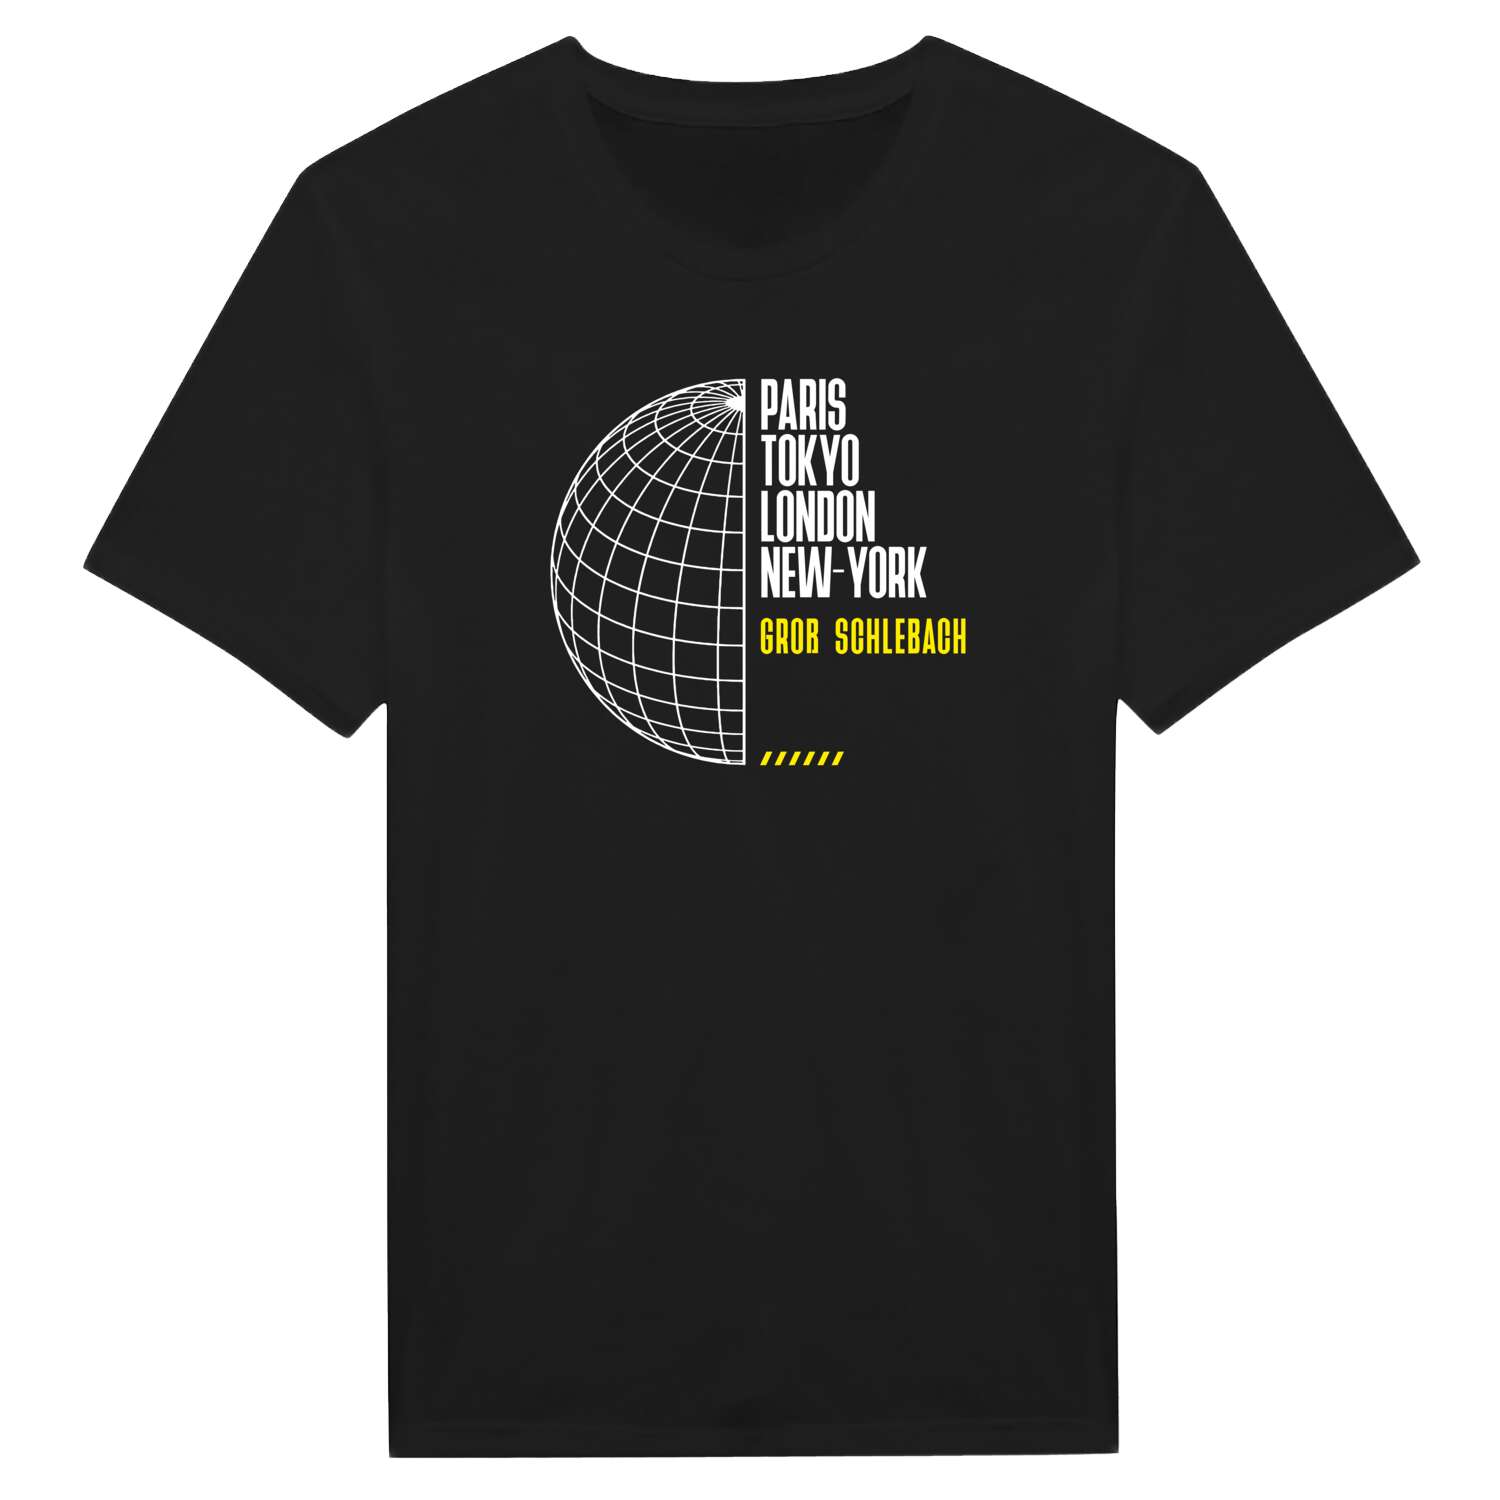 Groß Schlebach T-Shirt »Paris Tokyo London«